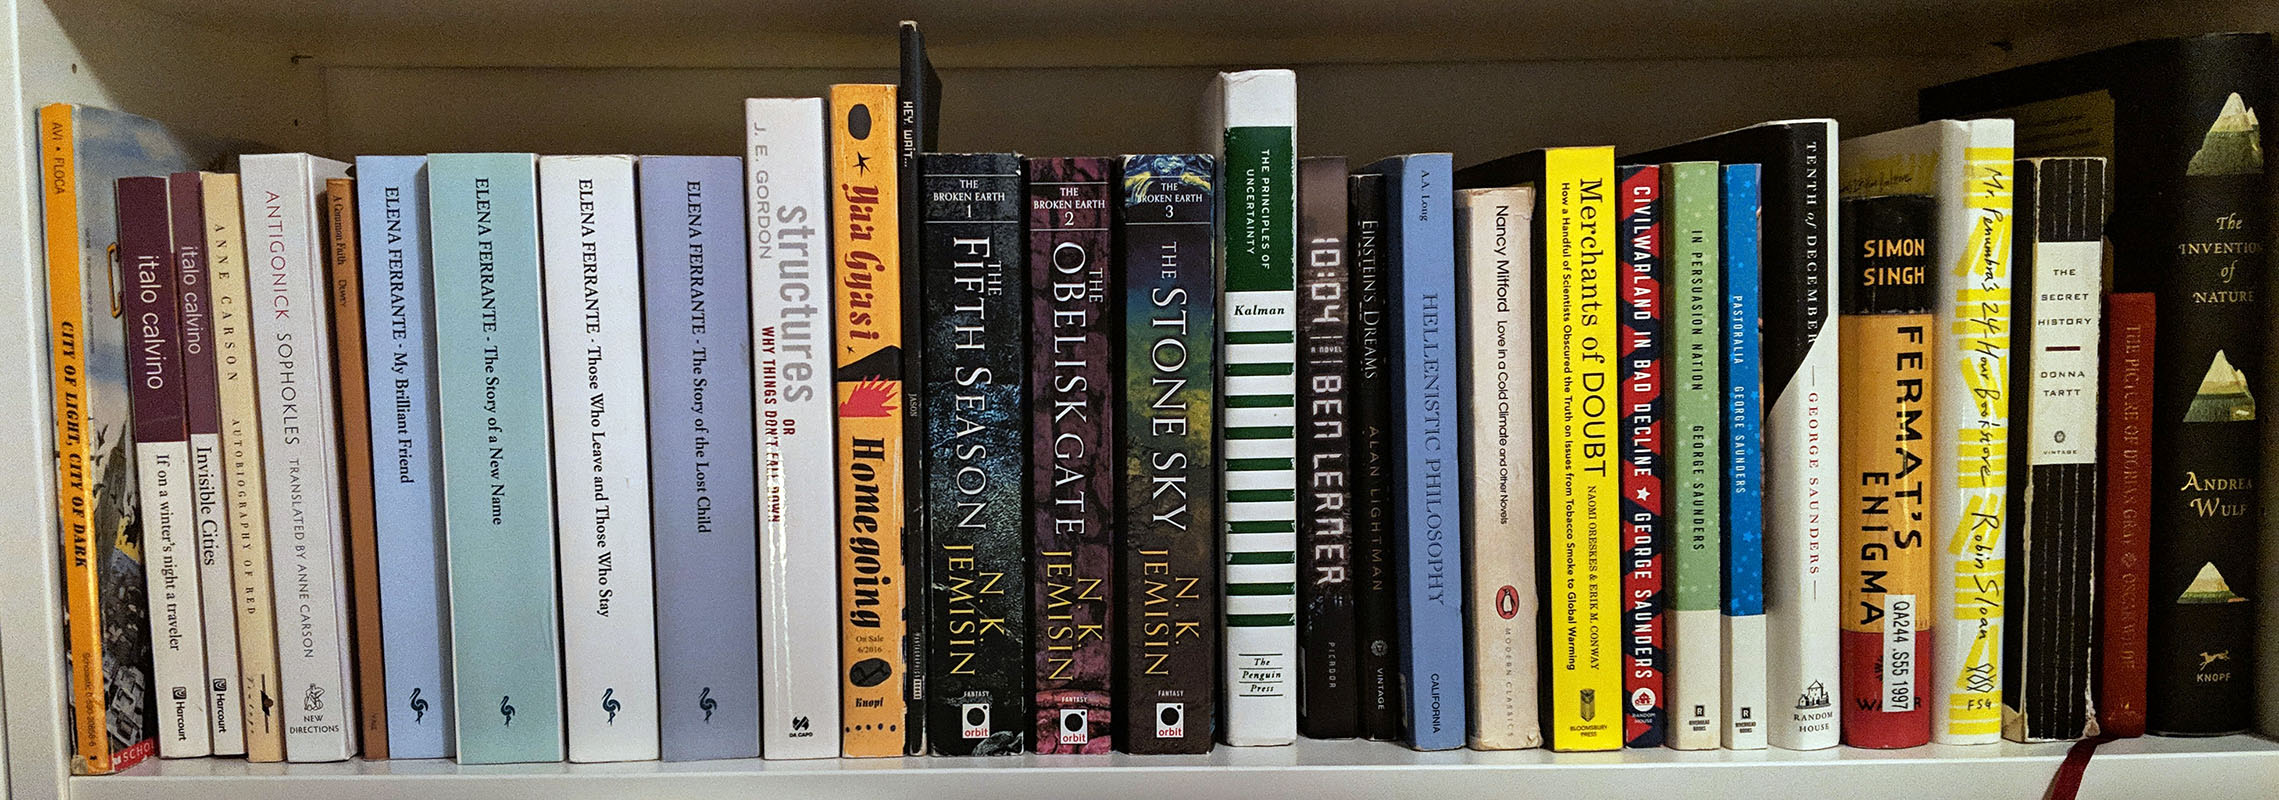 Bookshelf of mostly fiction books